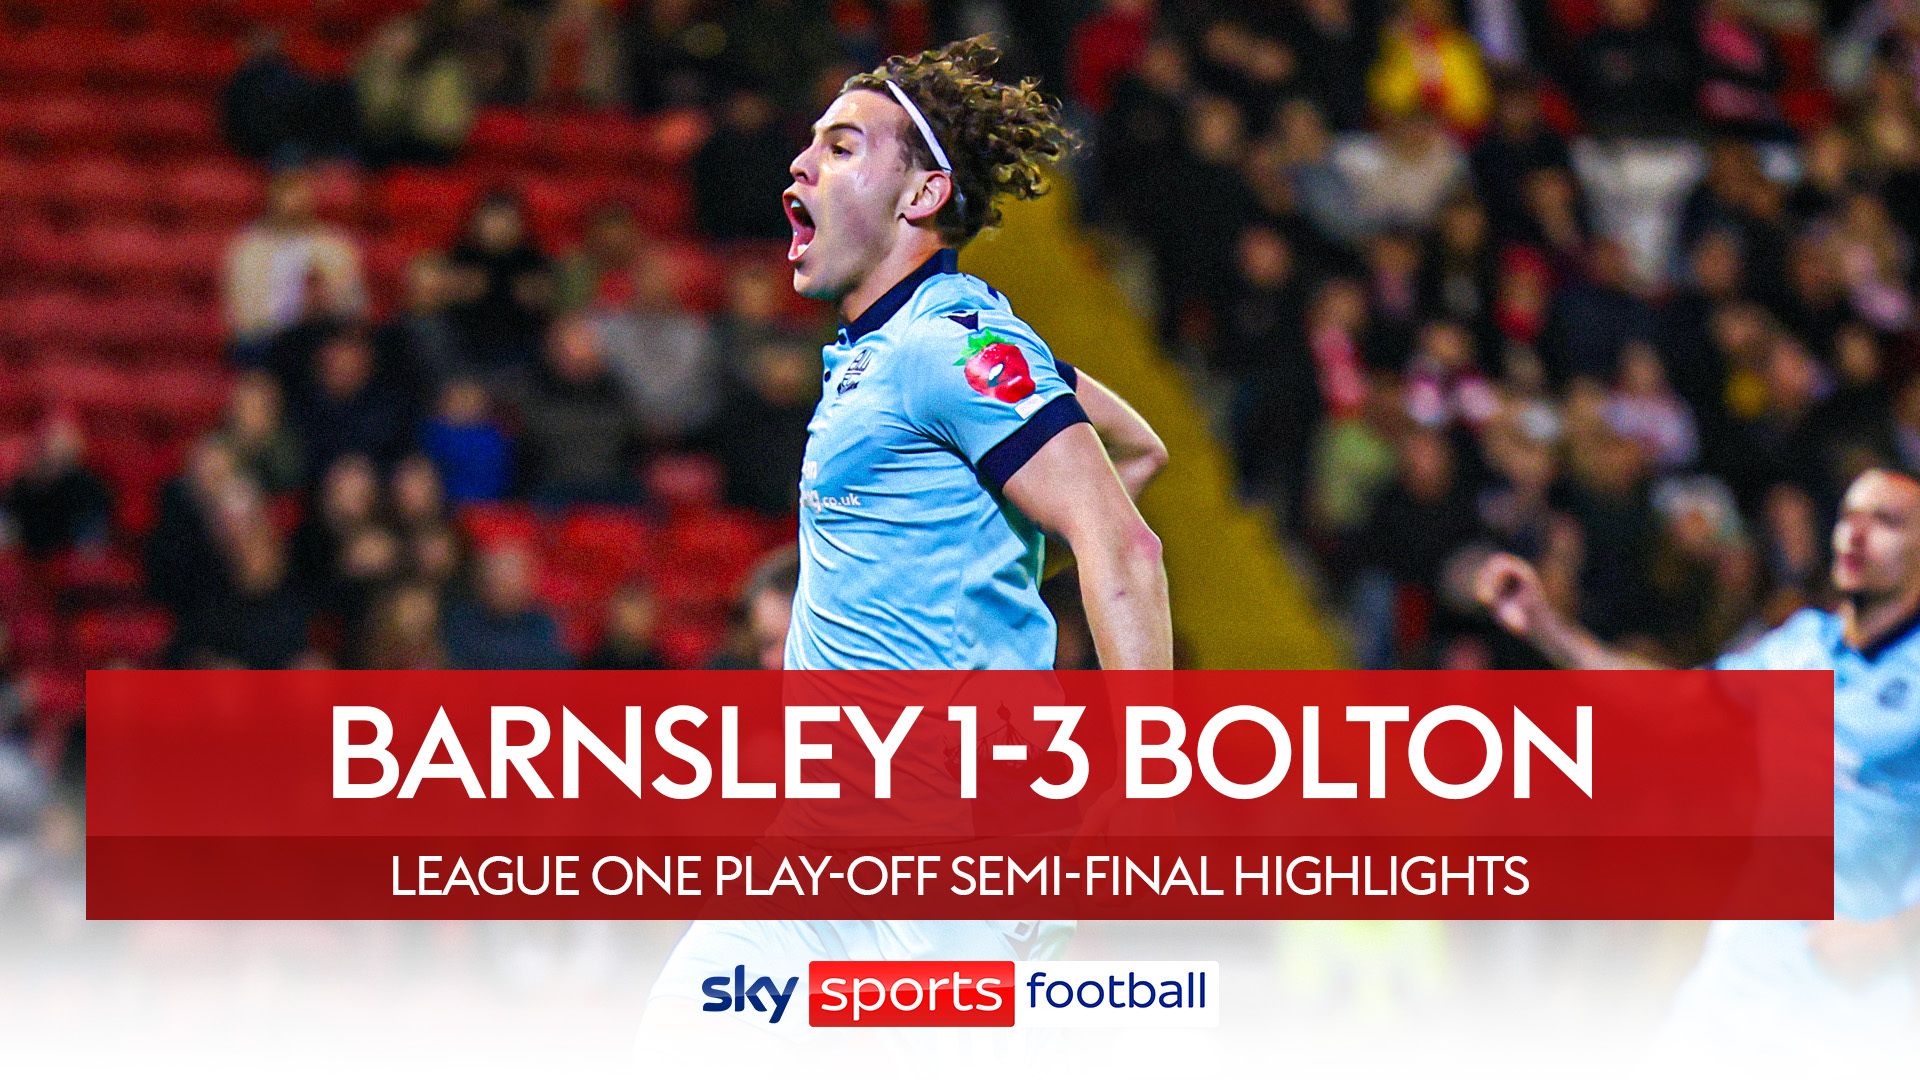 Barnsley 1-3 Bolton